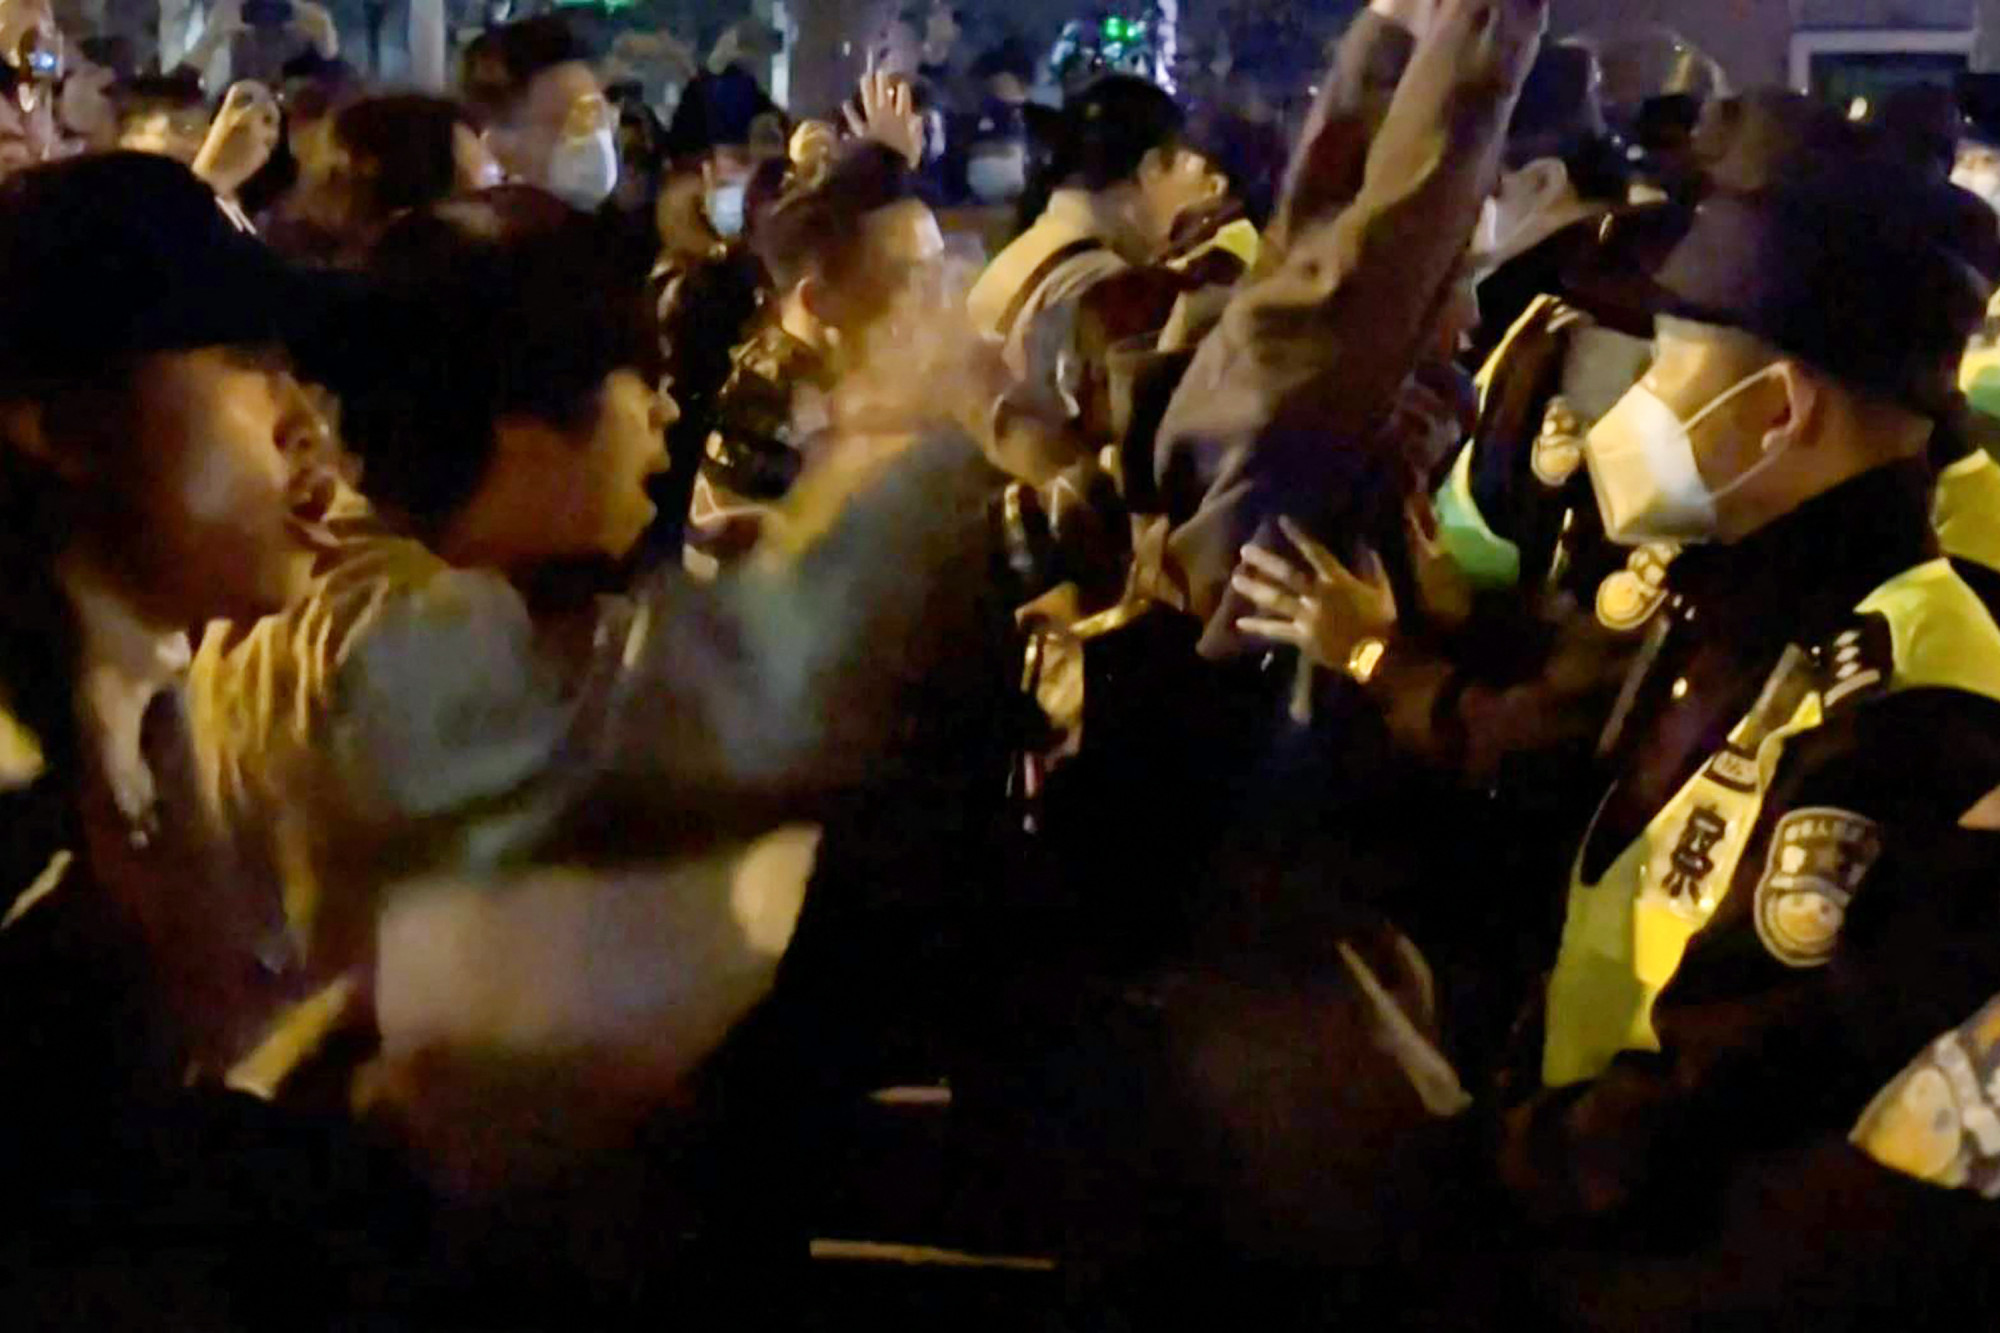 Sanghajt is elérte a kínai tüntetéshullám